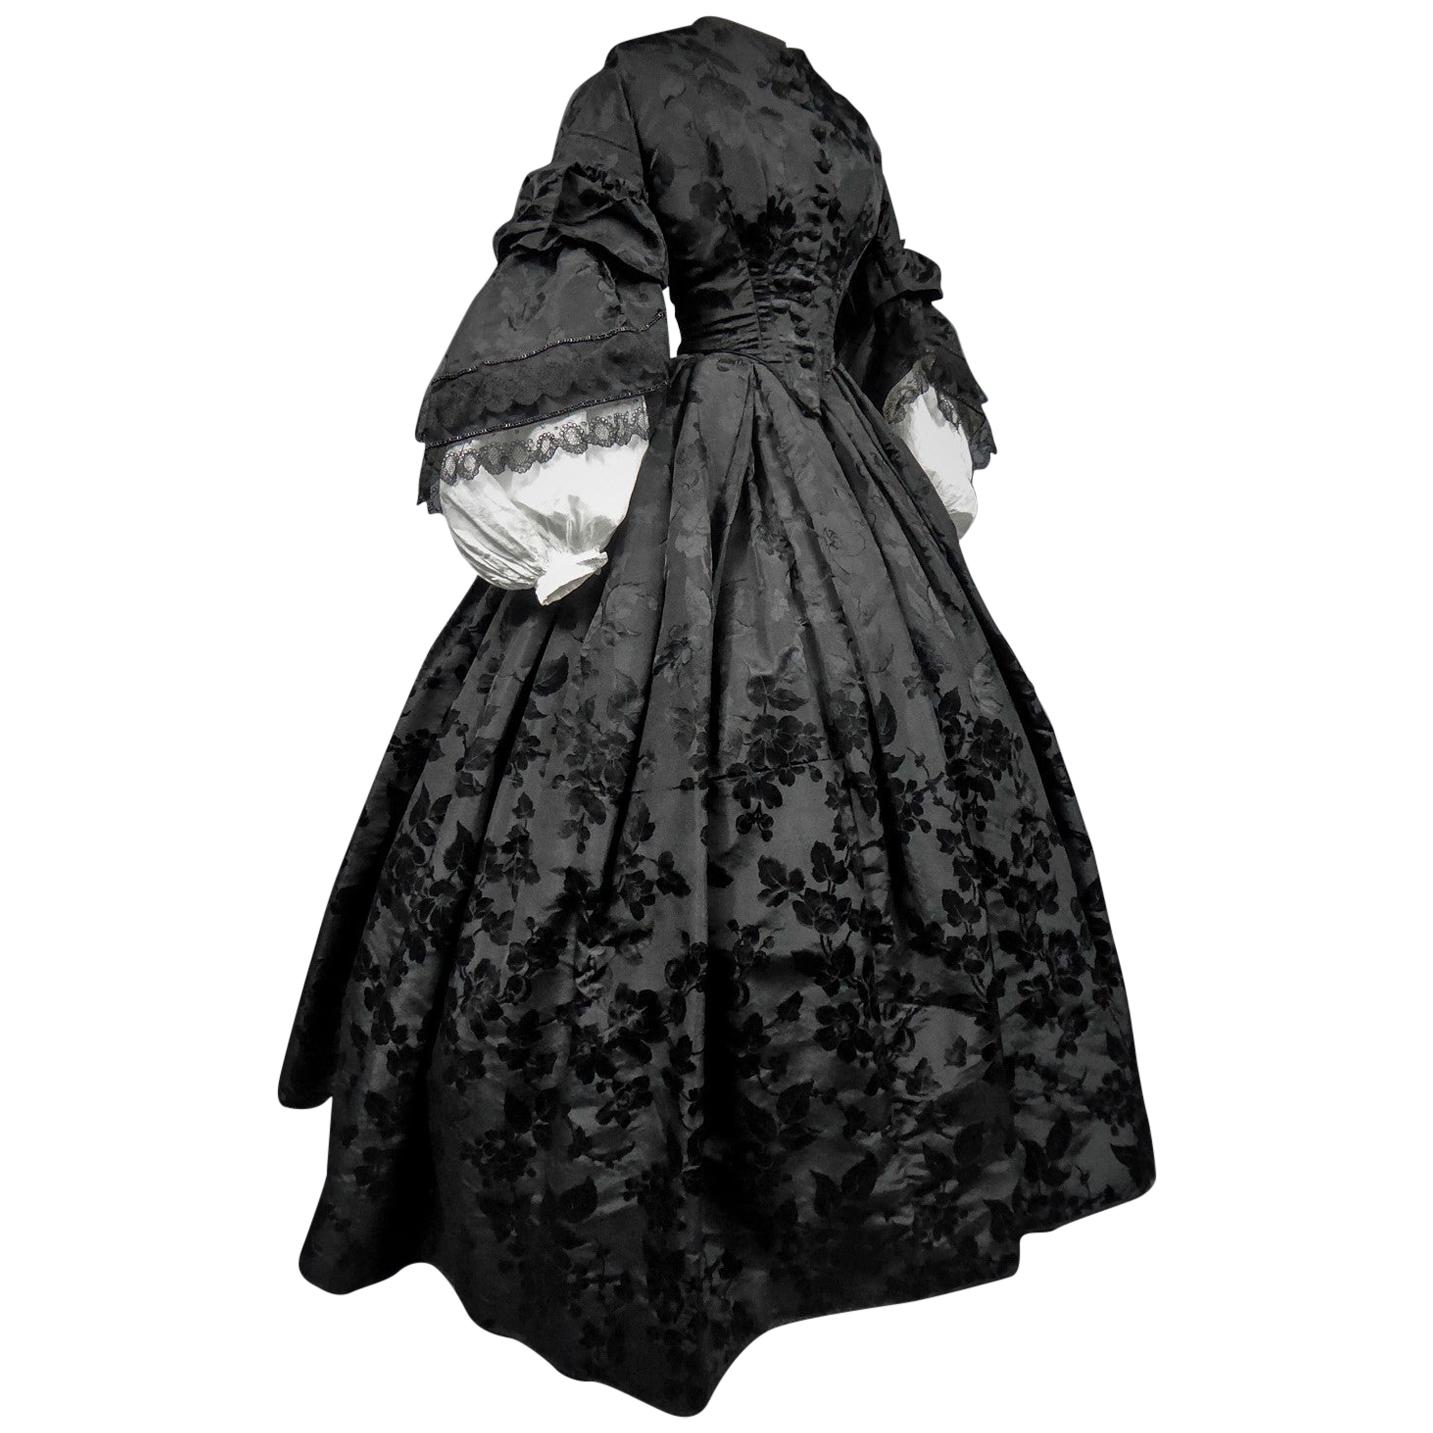 A French Crinoline Damask Silk Day Dress Circa 1865 with Provenance